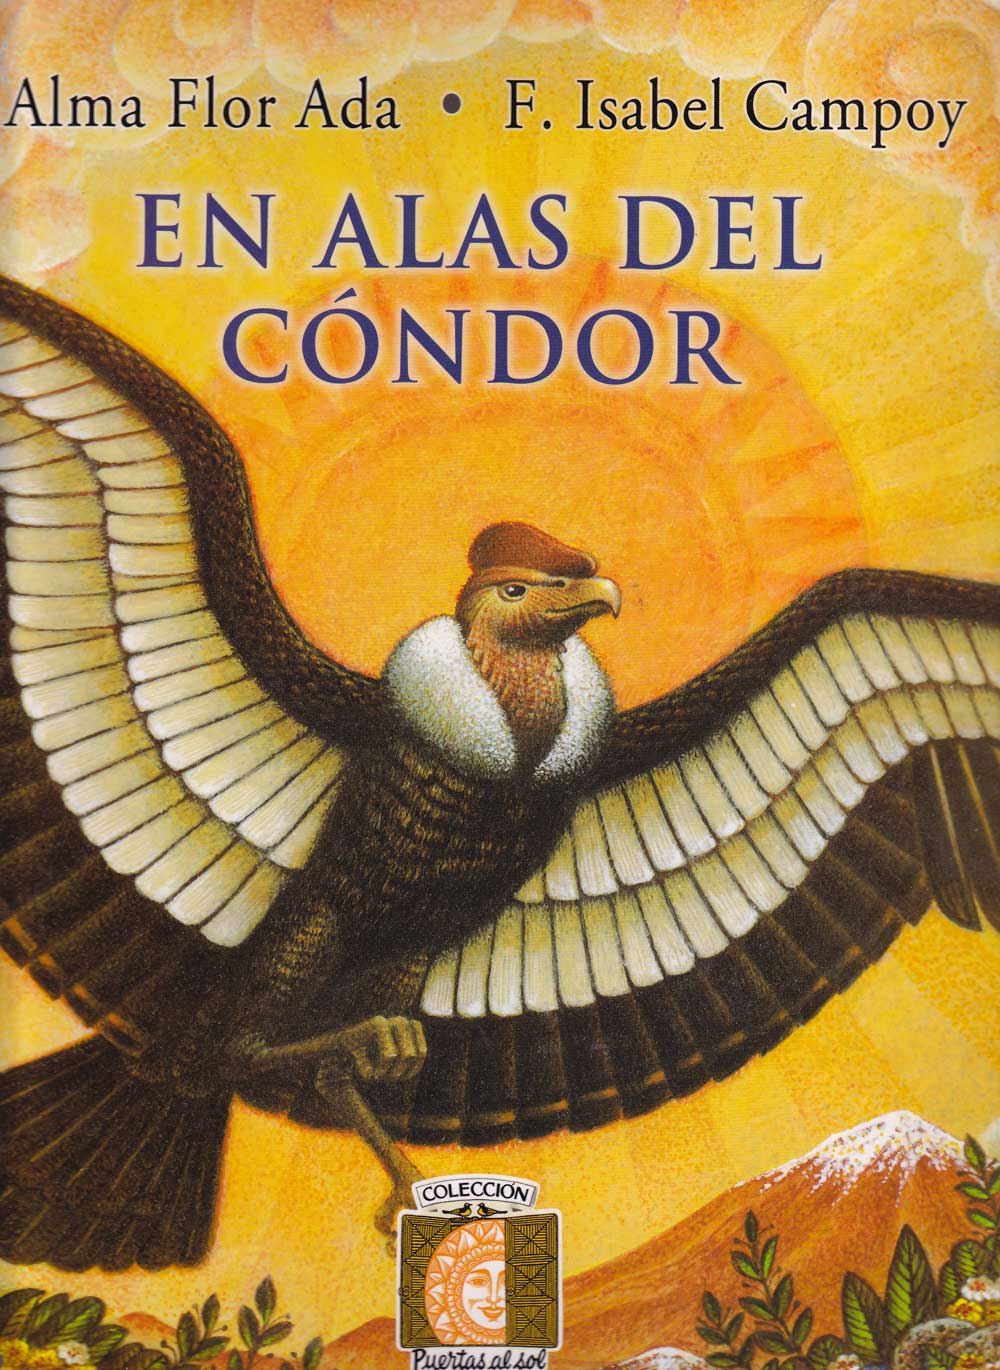 Puertas al sol Tierras Hispania Collection, Gateways to the Sun Hispanic Lands, Rey Del Sol, Del Sol Books, Del Sol University